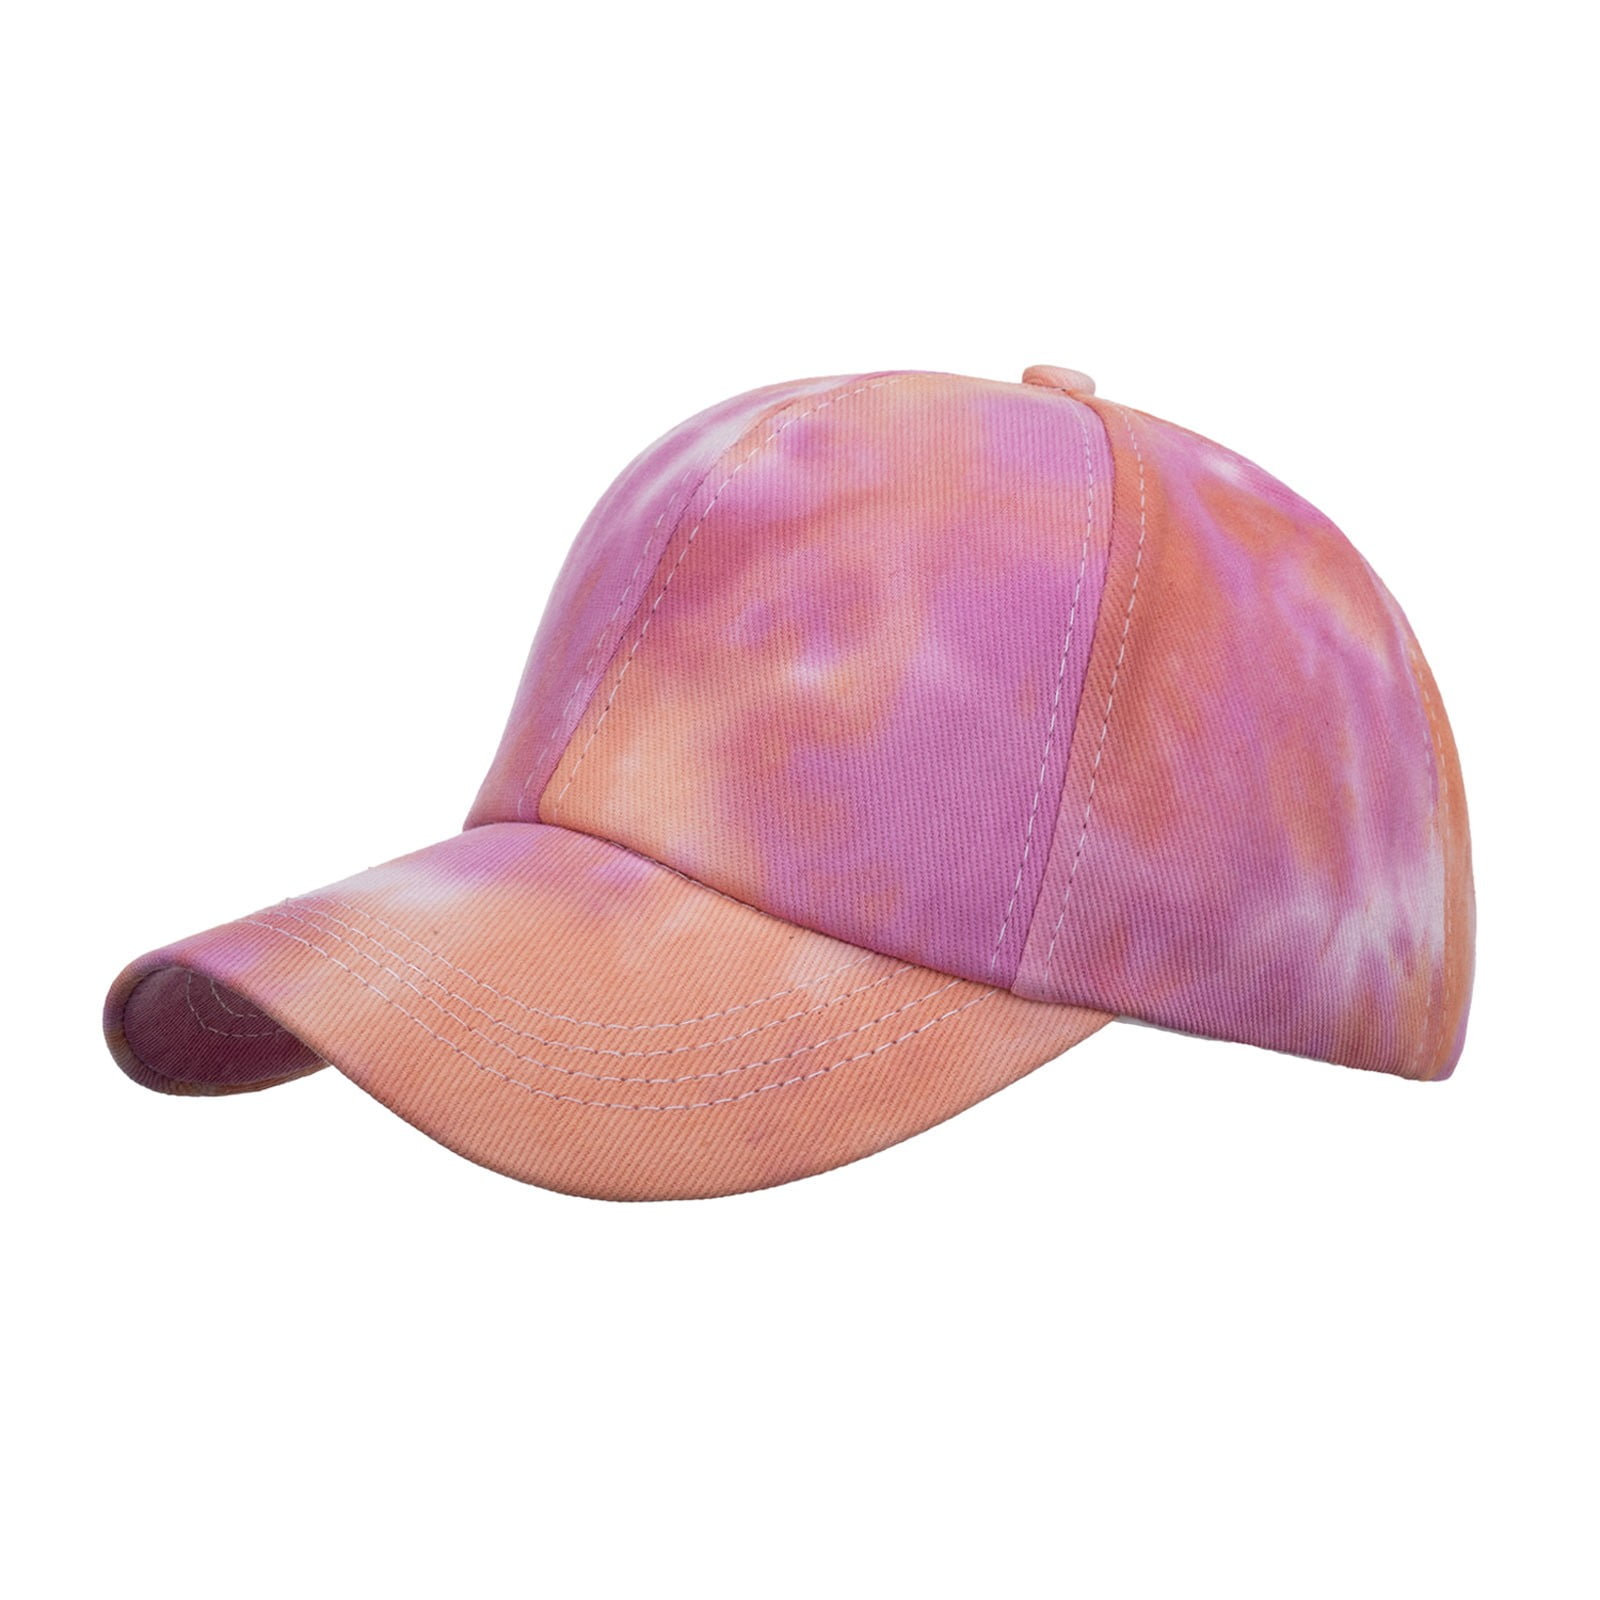 sport baseball breathable tie cap c hat hat caps women for winter sun gradient beanies baseball mnjin adjustable fashion beach dye men